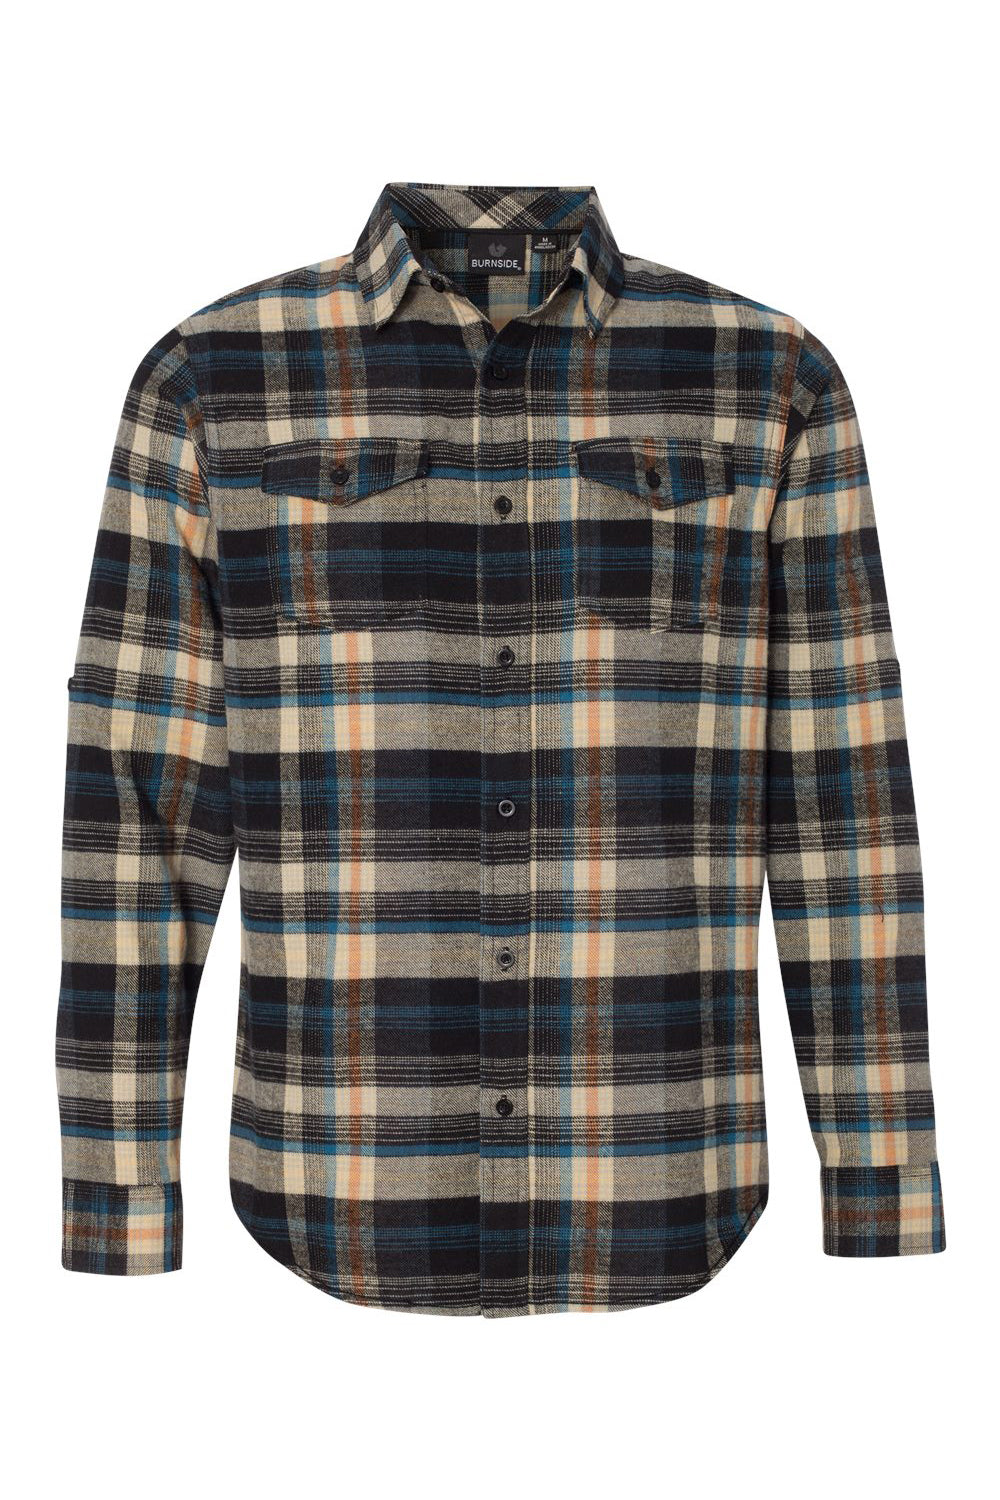 Burnside B8210/8210 Mens Flannel Long Sleeve Button Down Shirt w/ Double Pockets Dark Khaki Flat Front